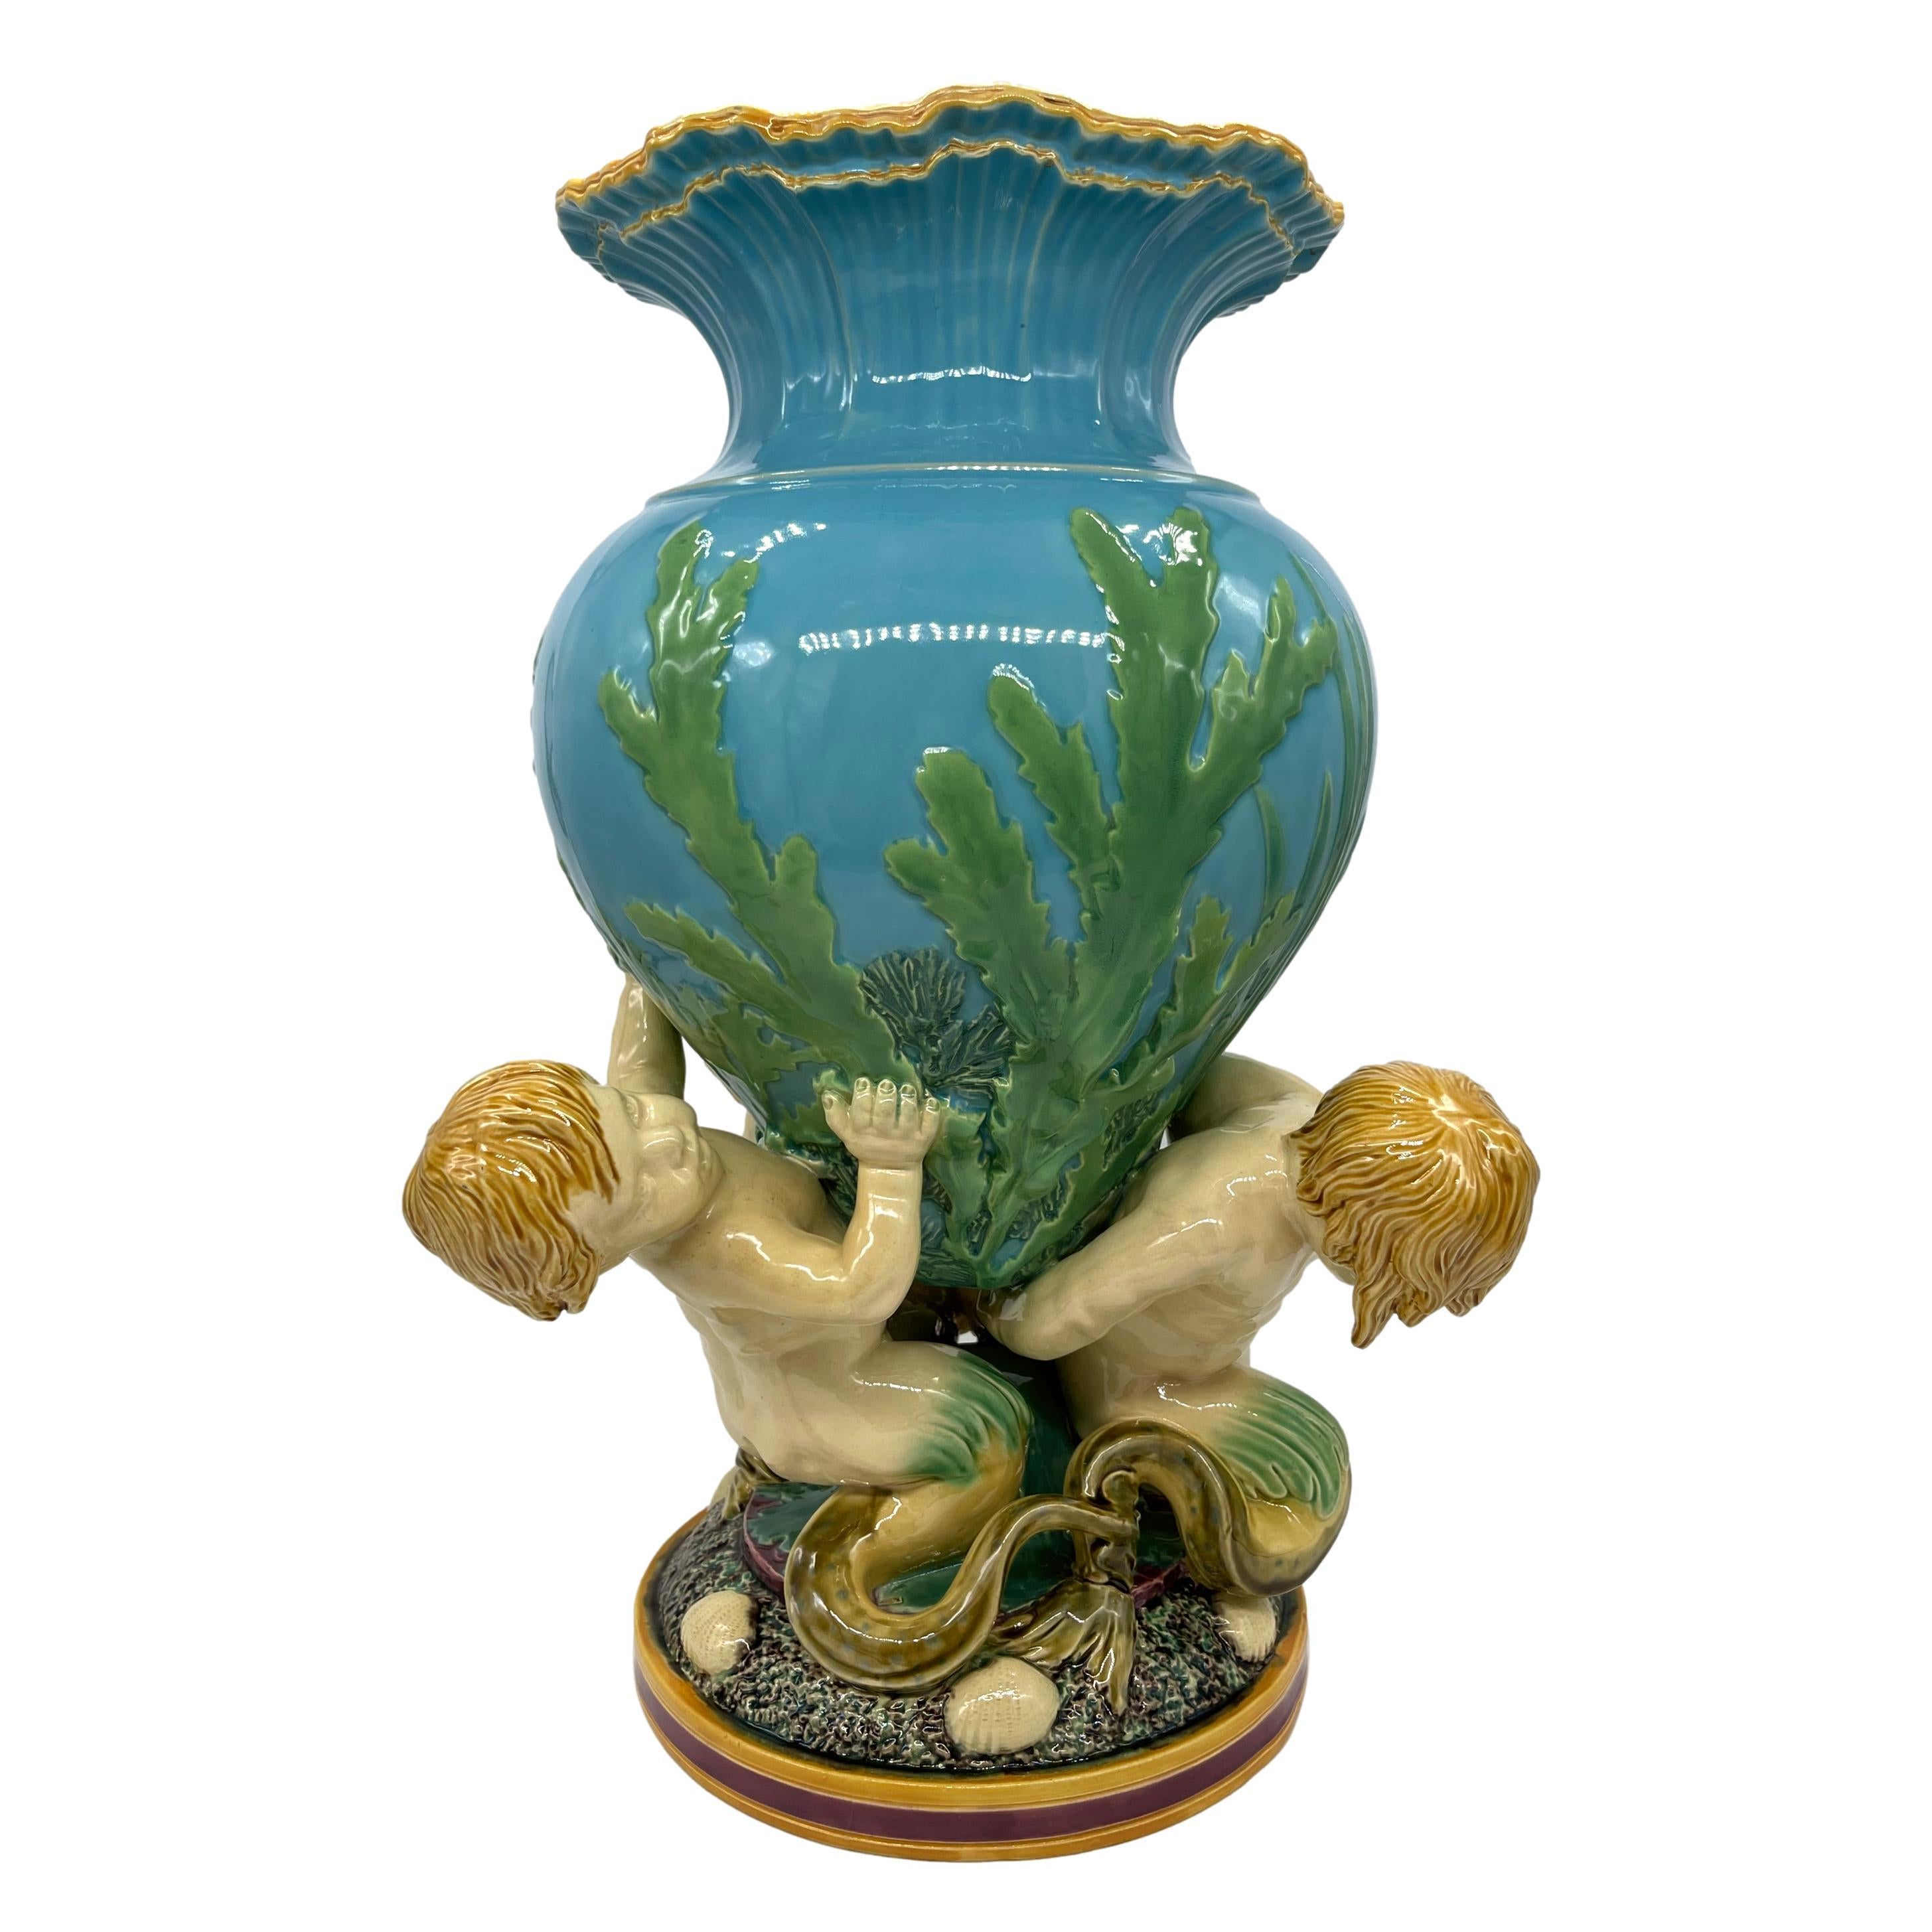 English Minton Majolica Triton Marine Vase on Turquoise Ground, Dated 1868